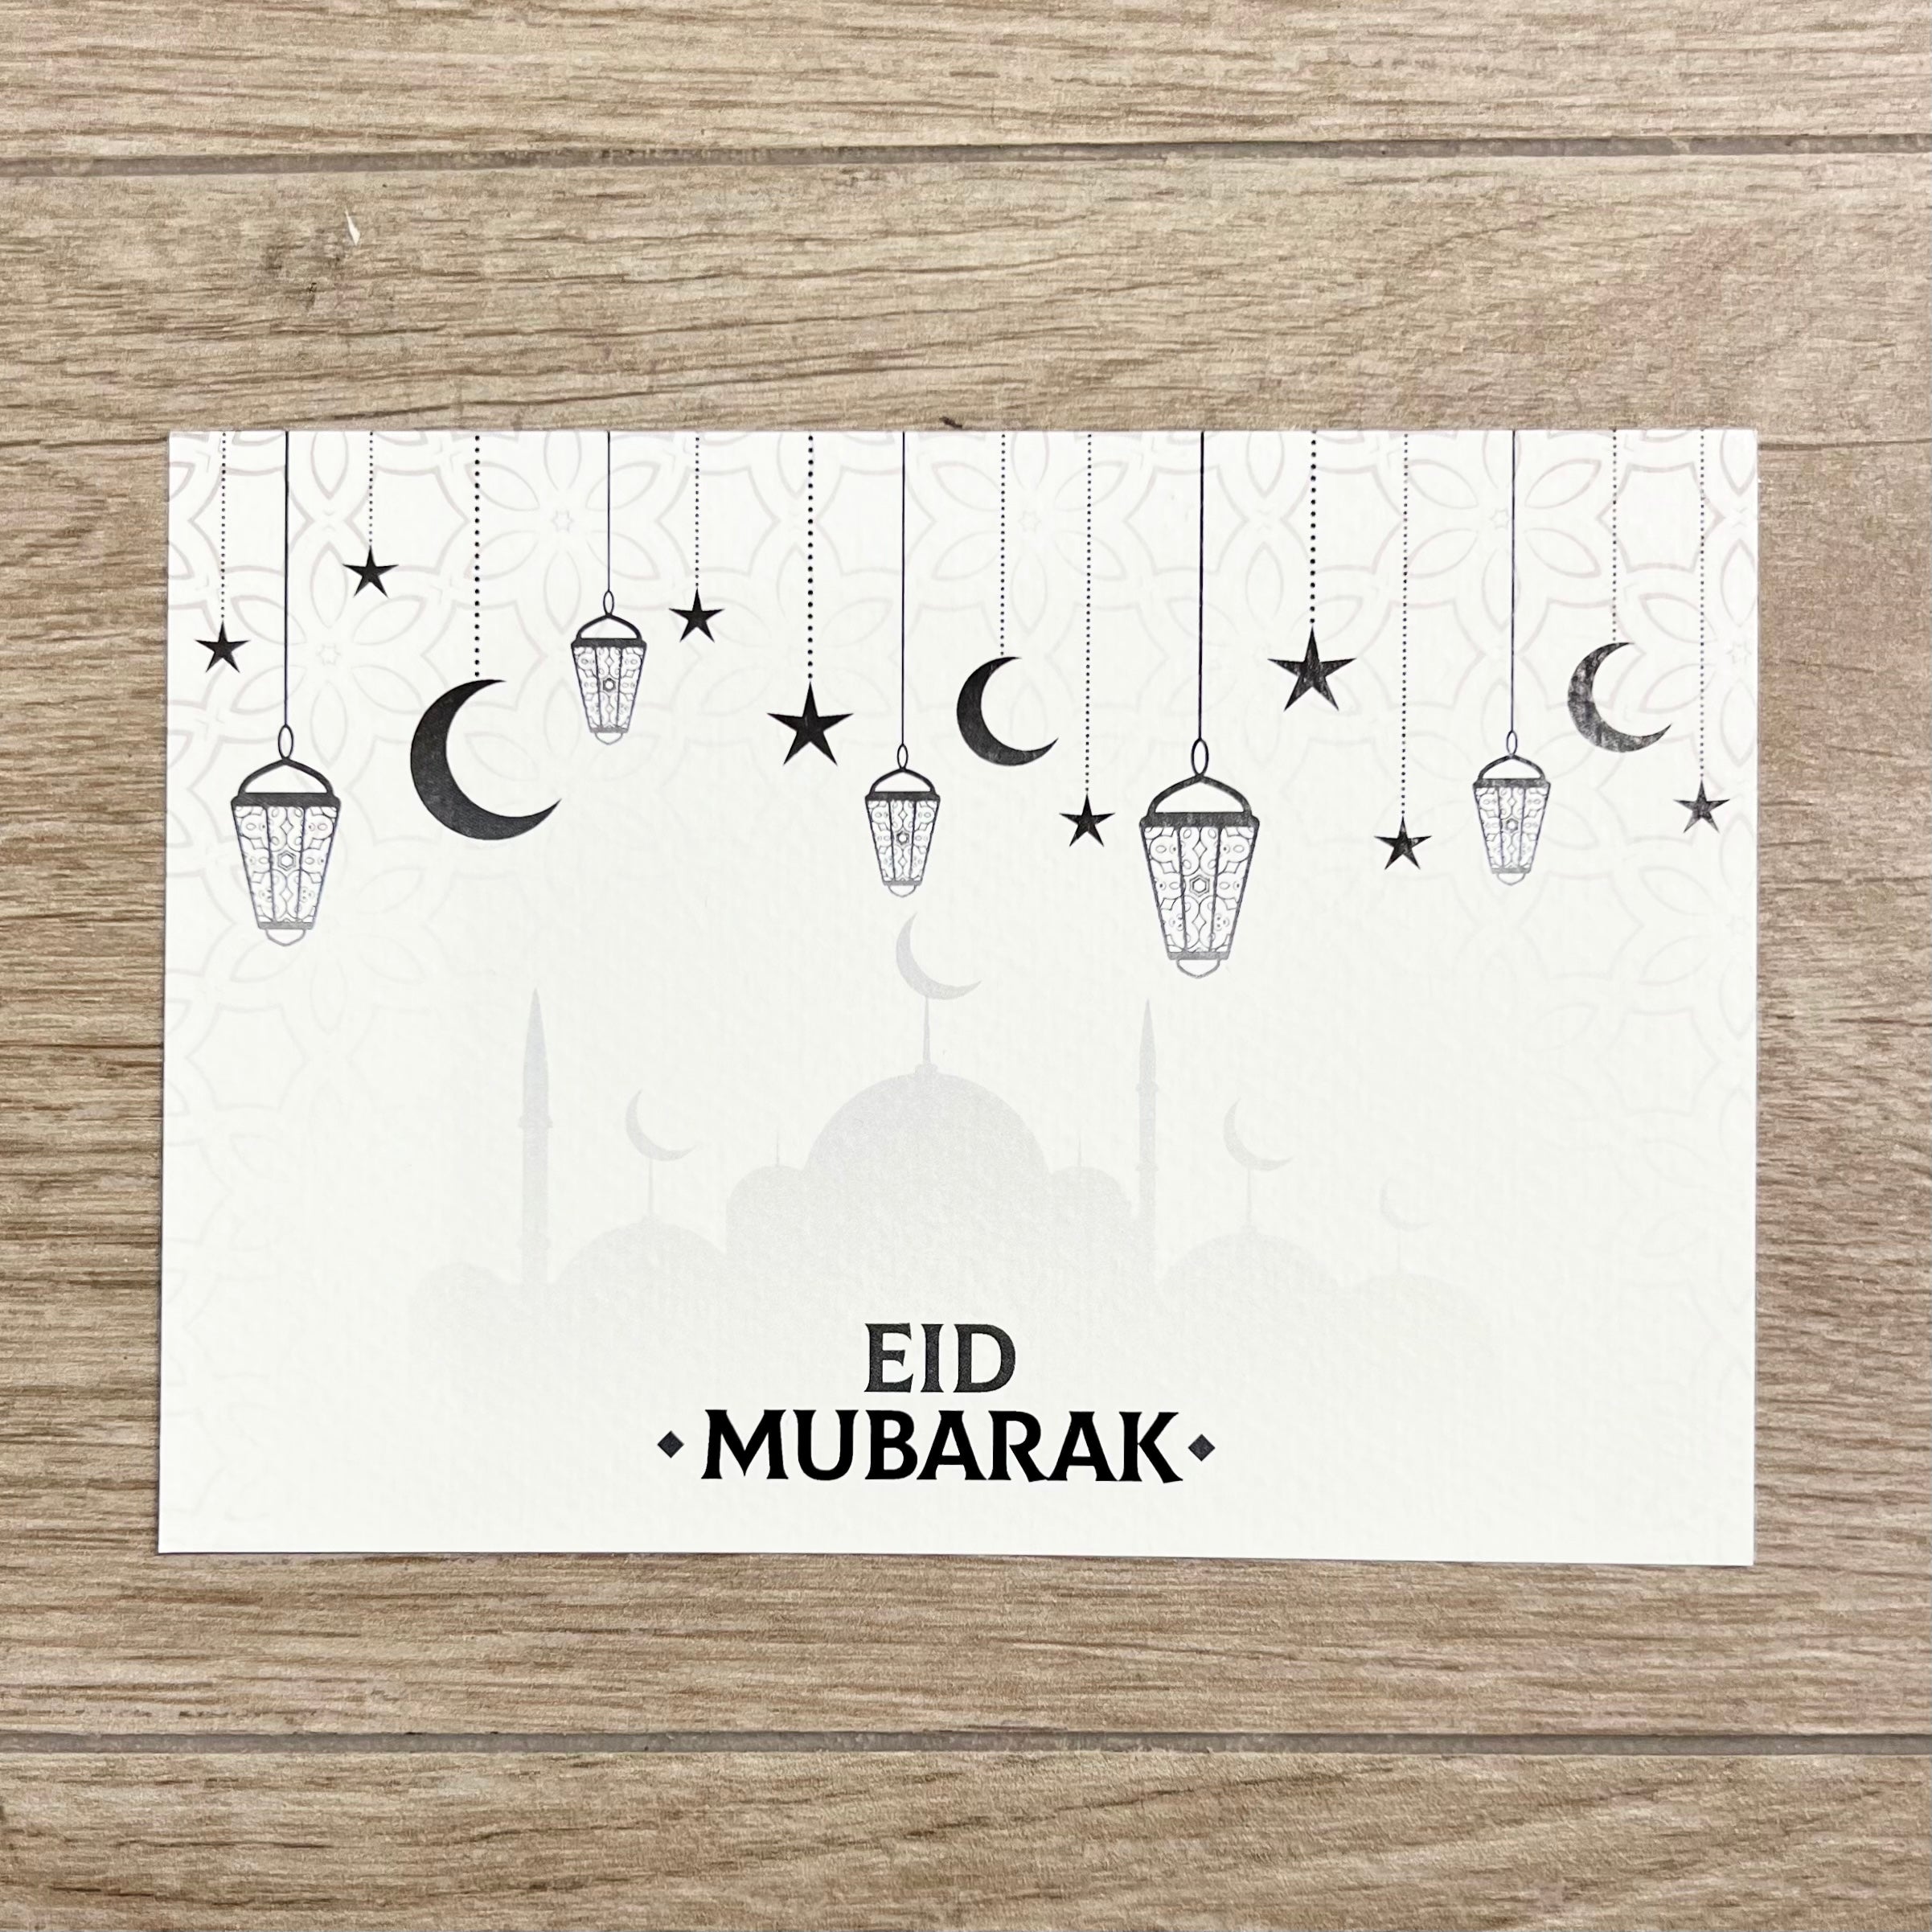 "Time To Celebrate Eid”